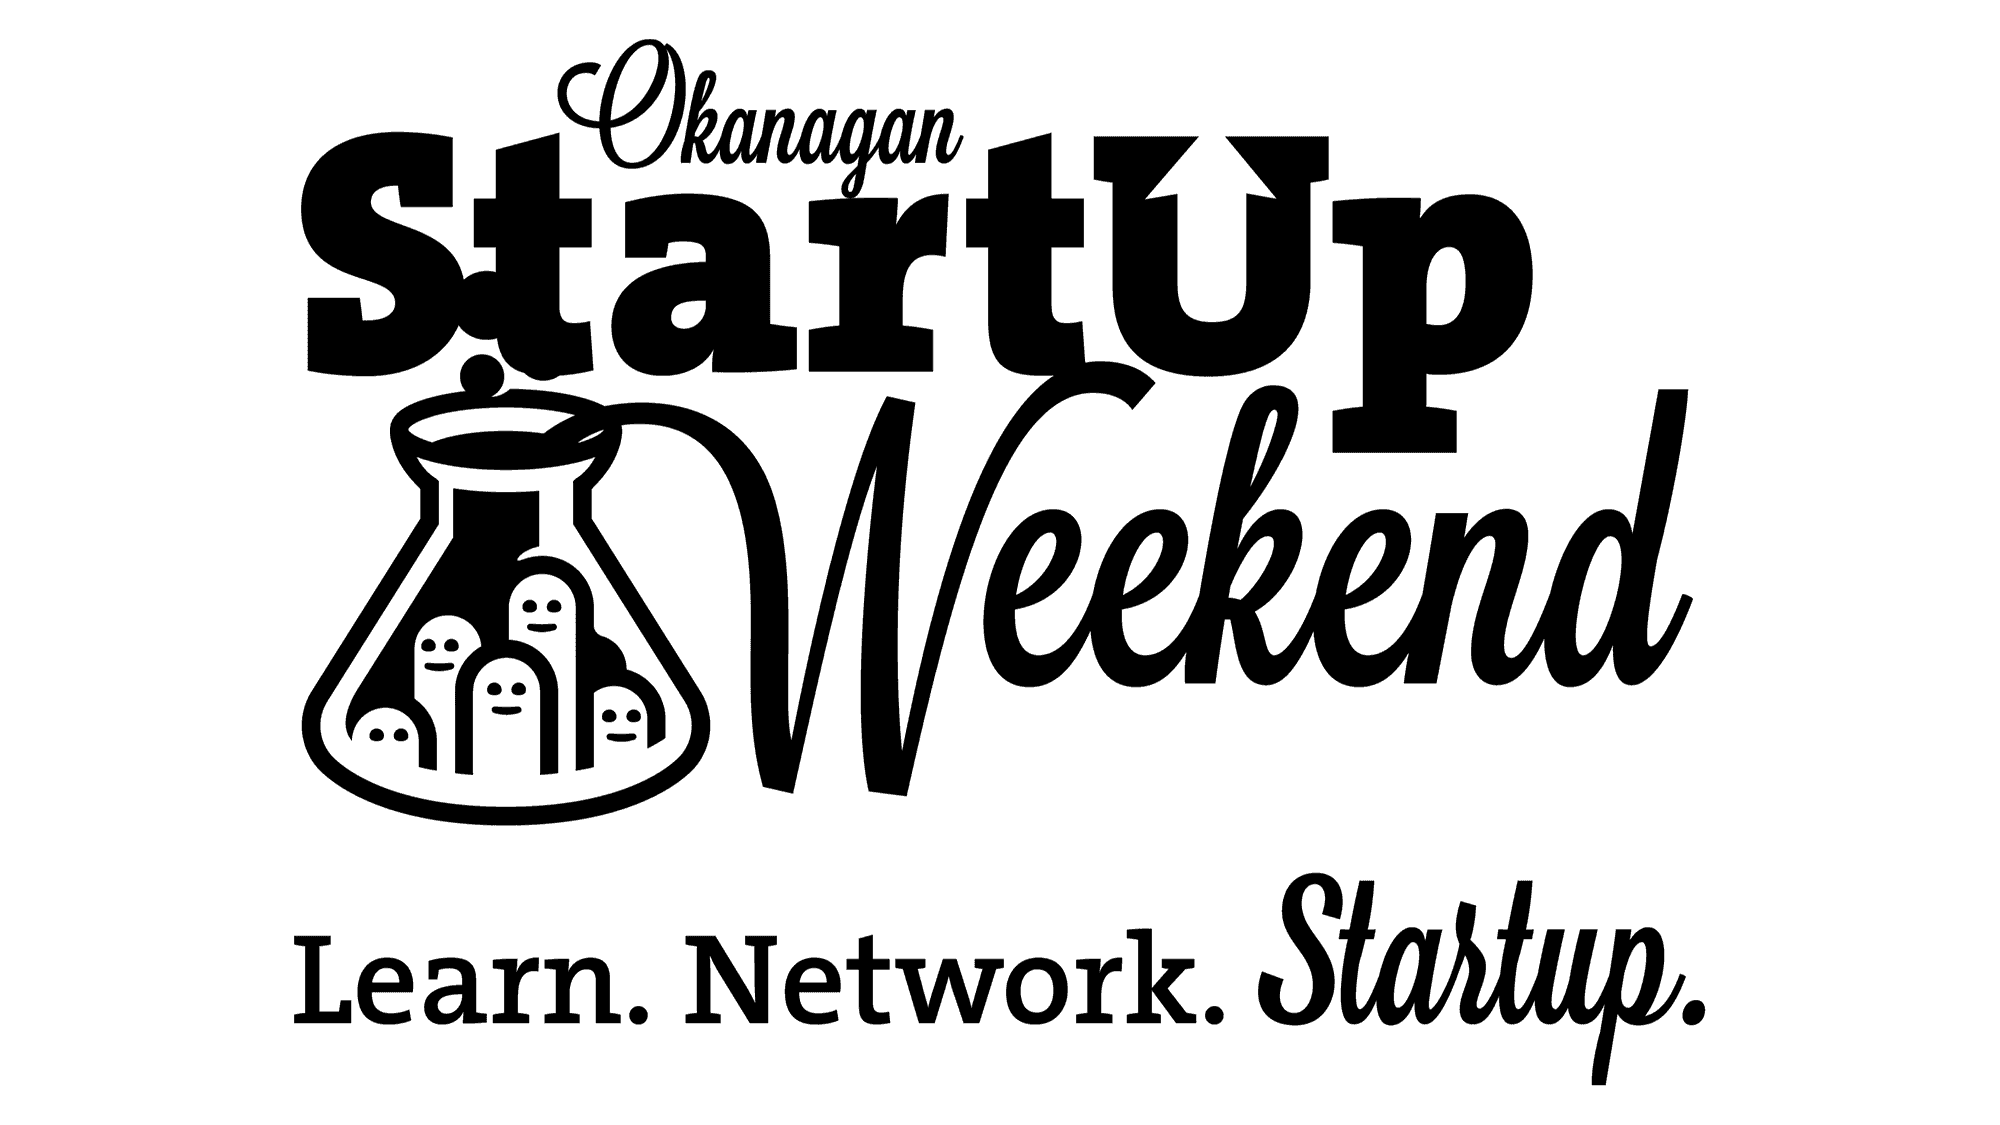 Okanagan Startup Weekend Association logo